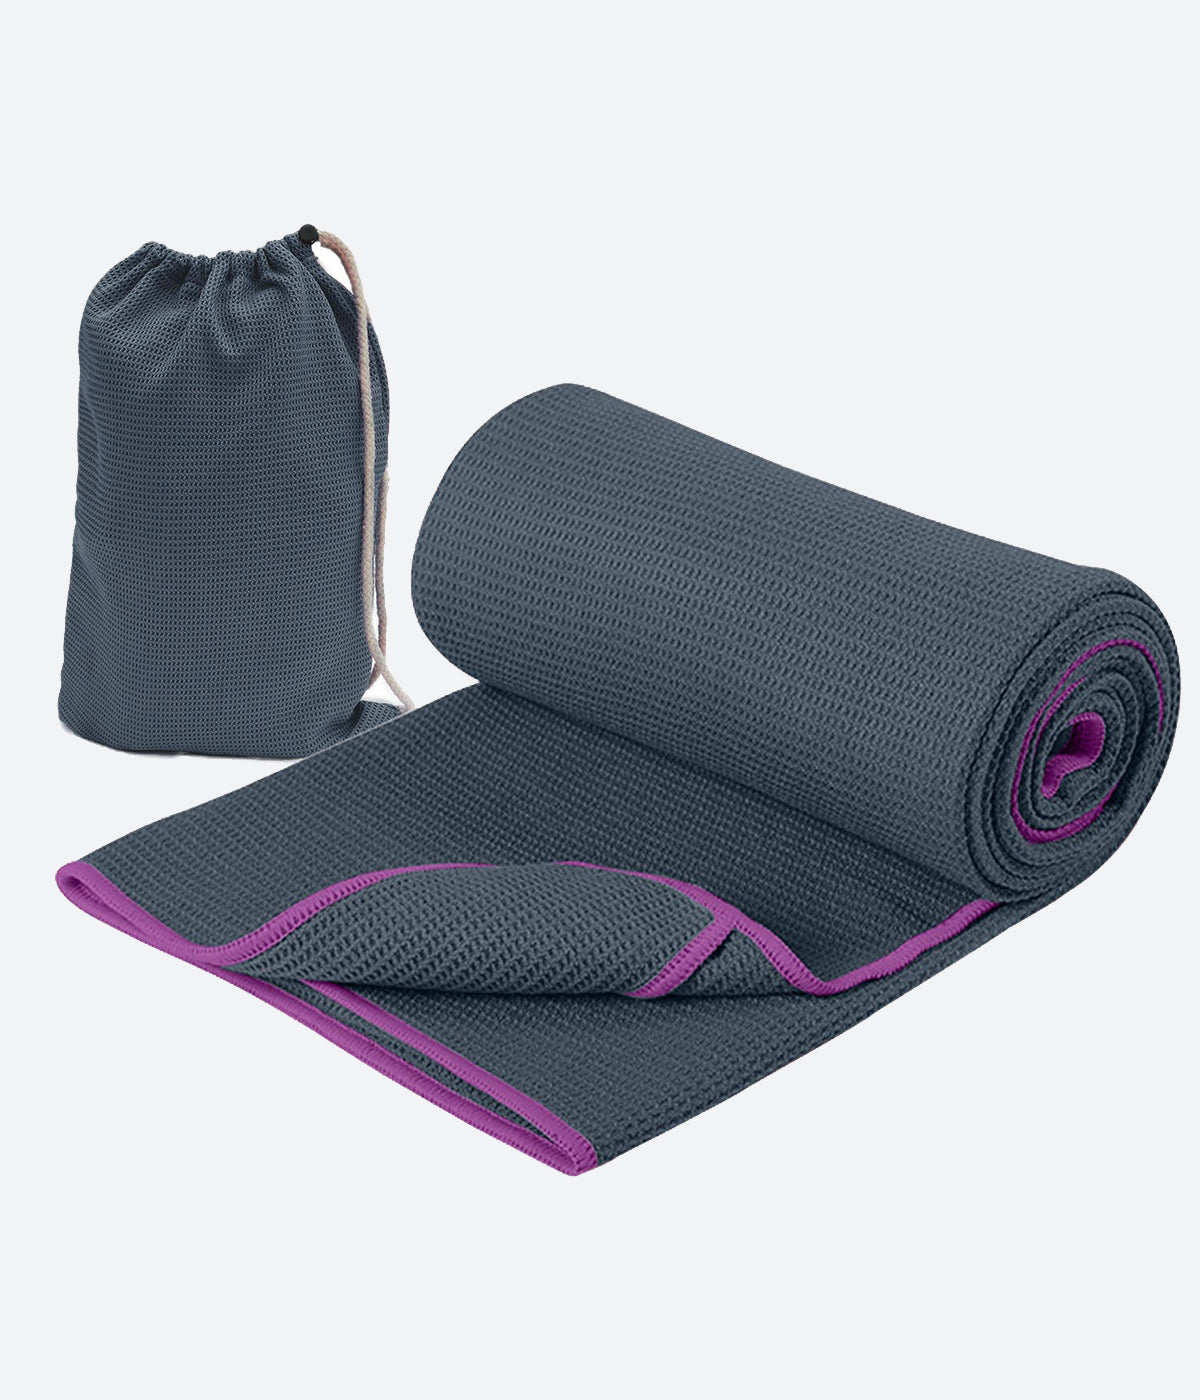  Heathyoga Yoga Towel, Yoga Rug, Original Corner Pocket  Design, Free Spray Bottle, 100% Microfiber Yoga Mat/Towel, For Hot Yoga,  Pilates & Fitness Activities : Sports & Outdoors